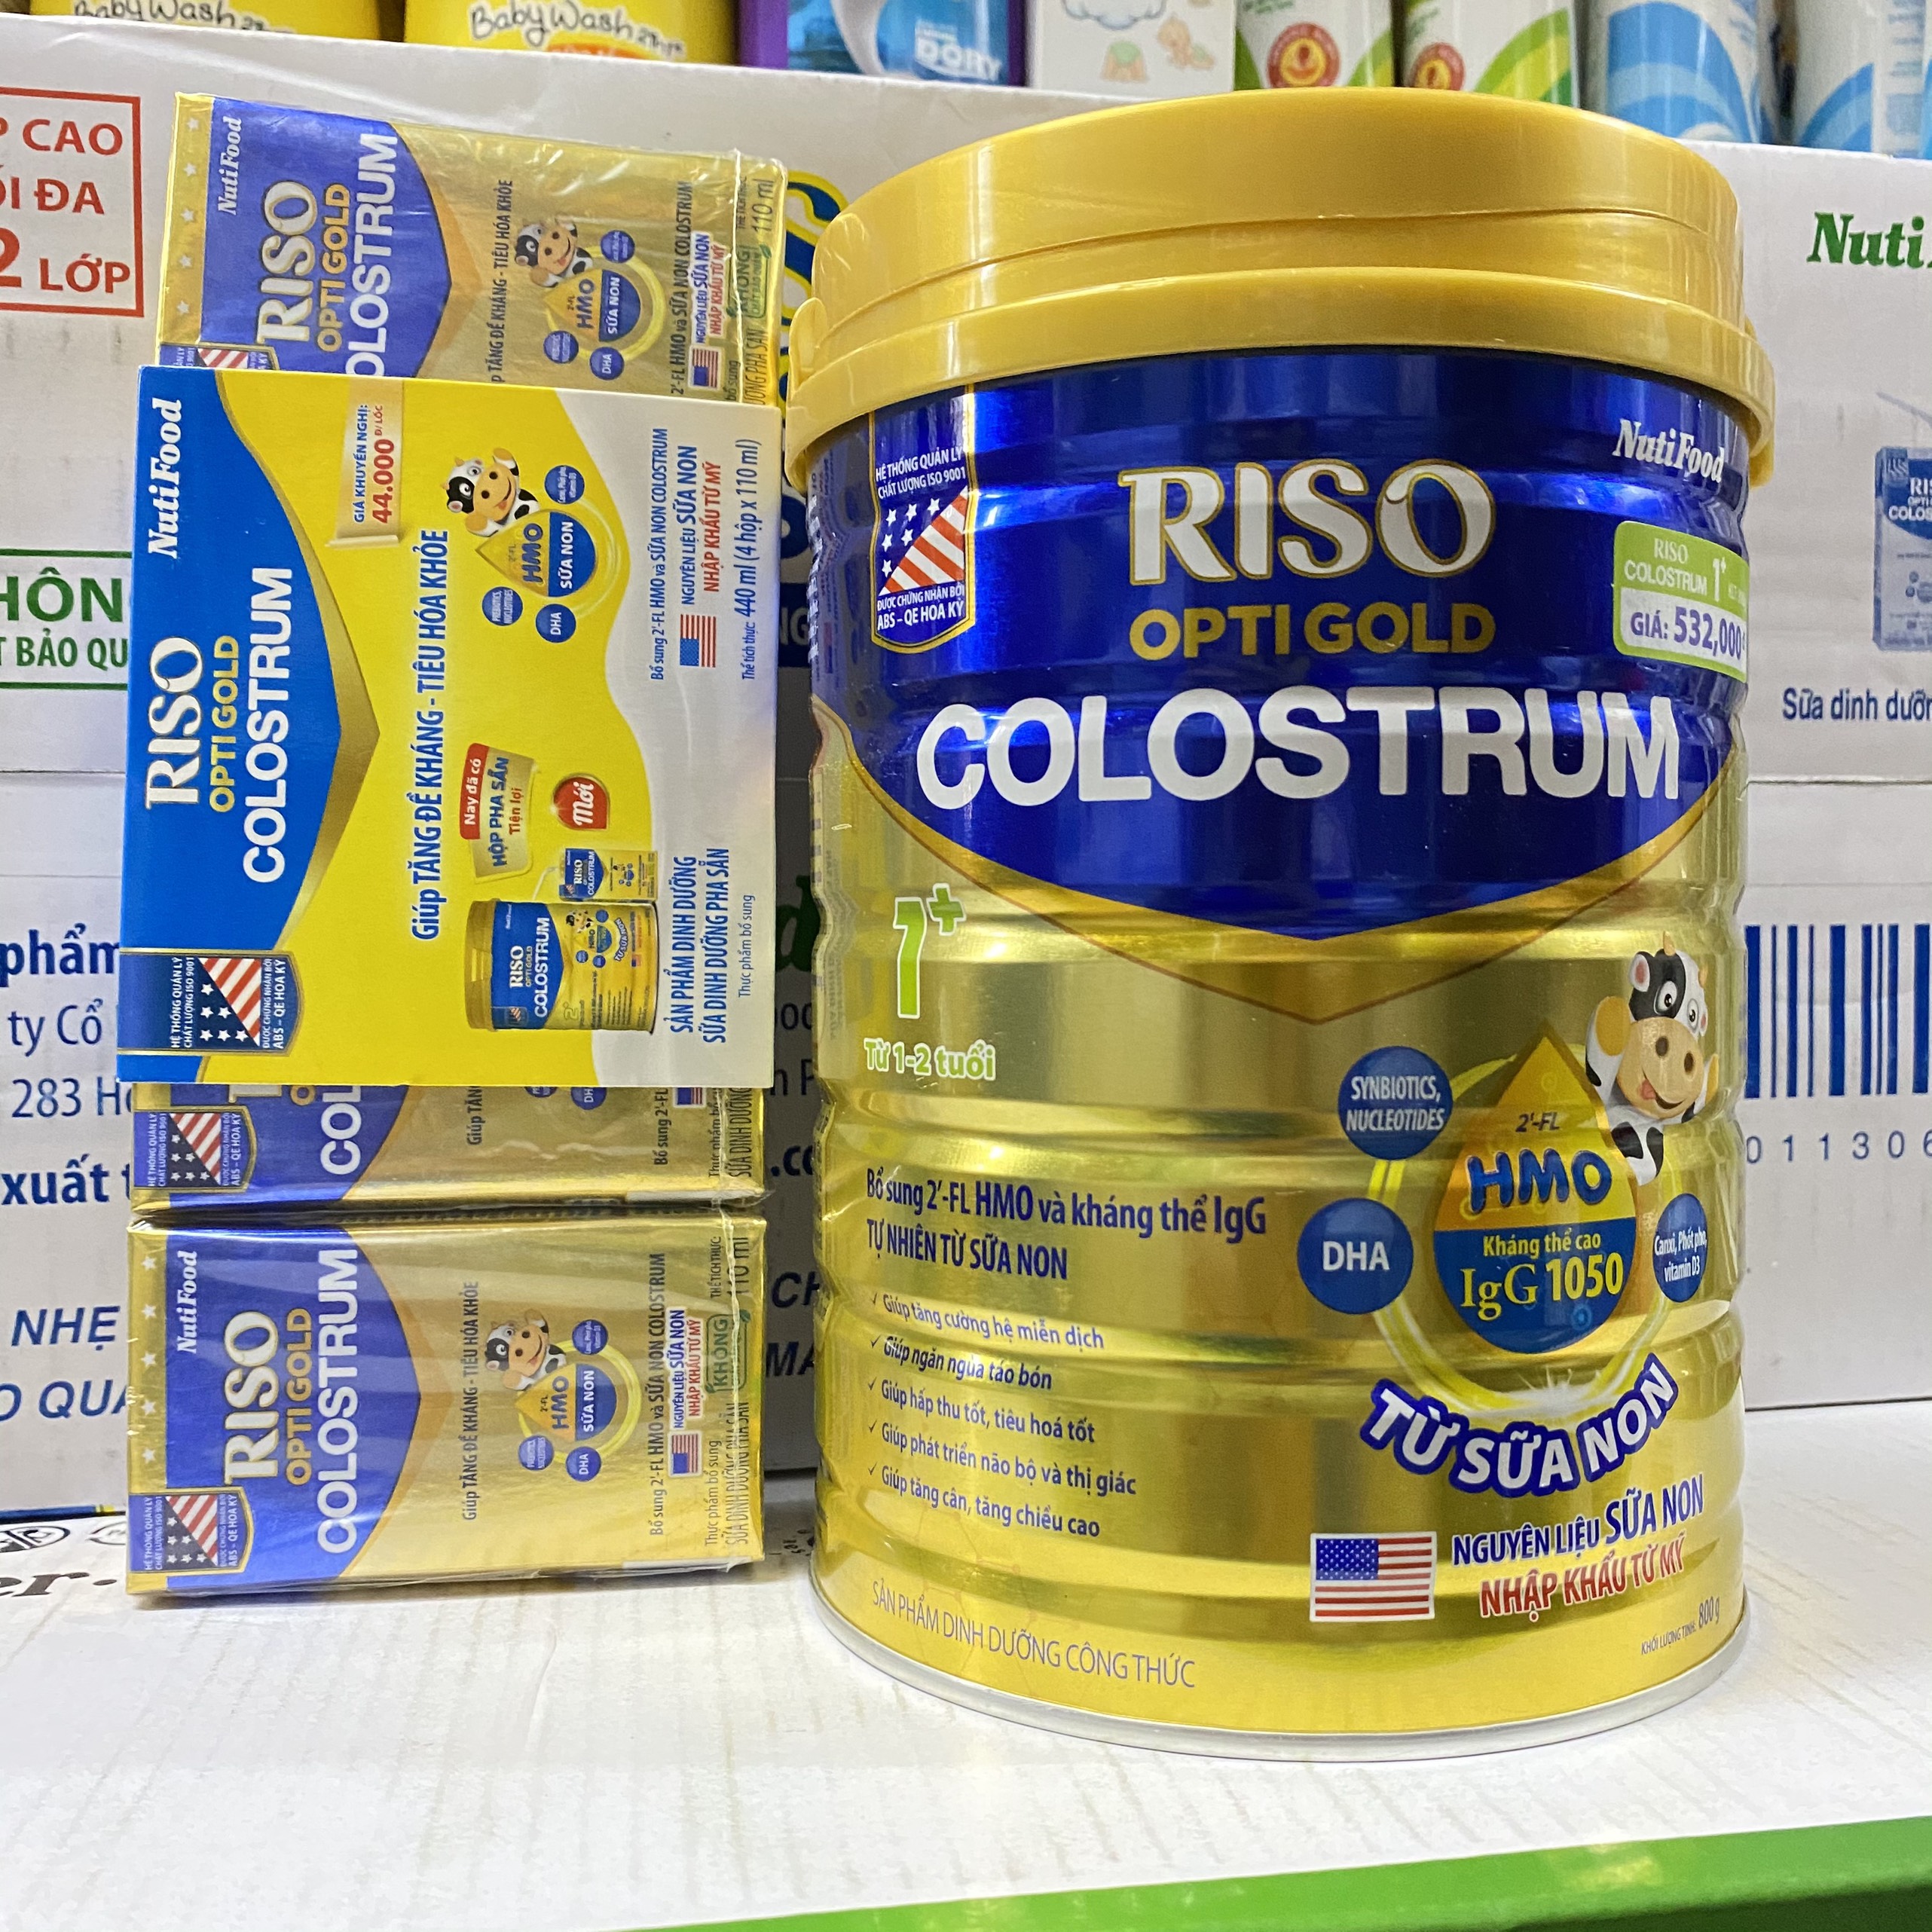 [DATE 2023] Sữa Riso Opti Gold Colostrum 1+ lon 800g + 4 Hộp sữa pha sẵn 110ML RISO COLUSTRUM